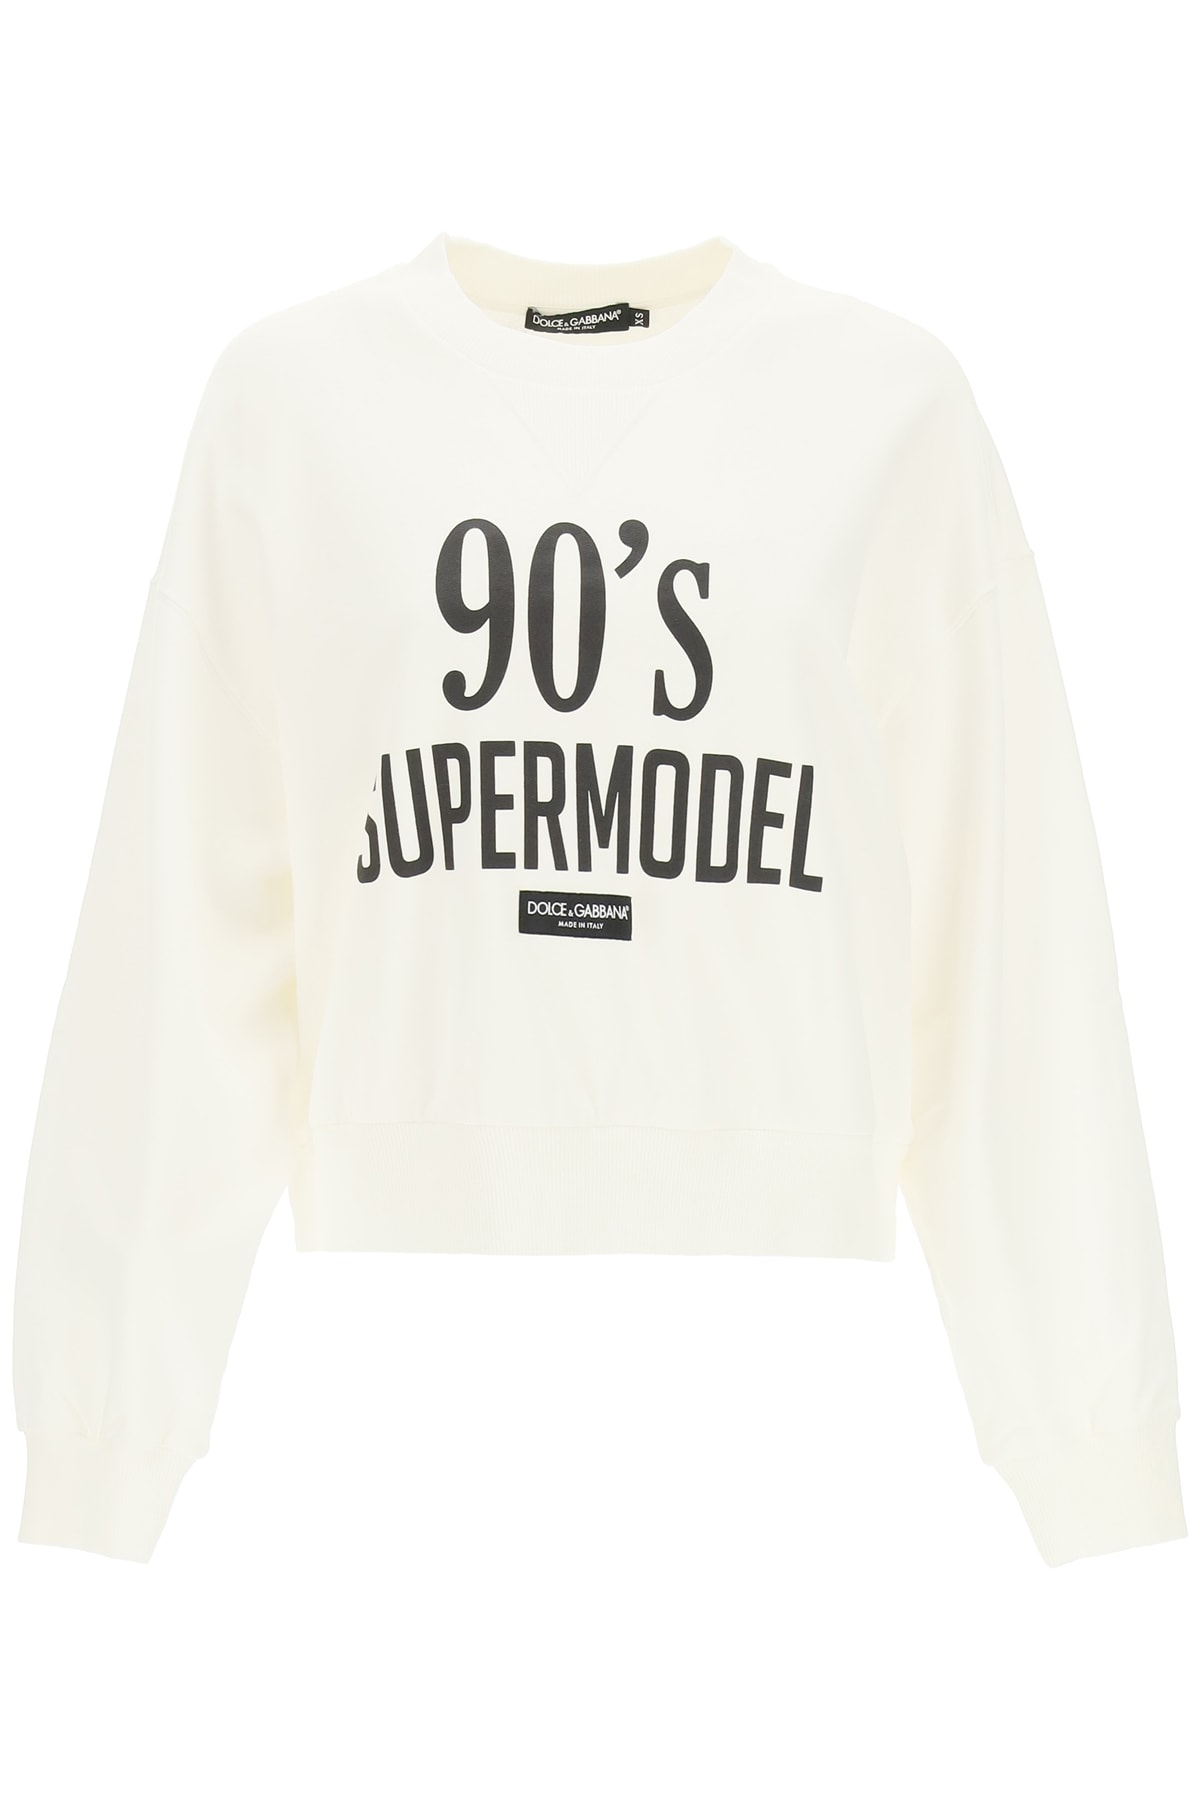 Dolce & Gabbana Cropped Sweatshirt 90s Supermodel